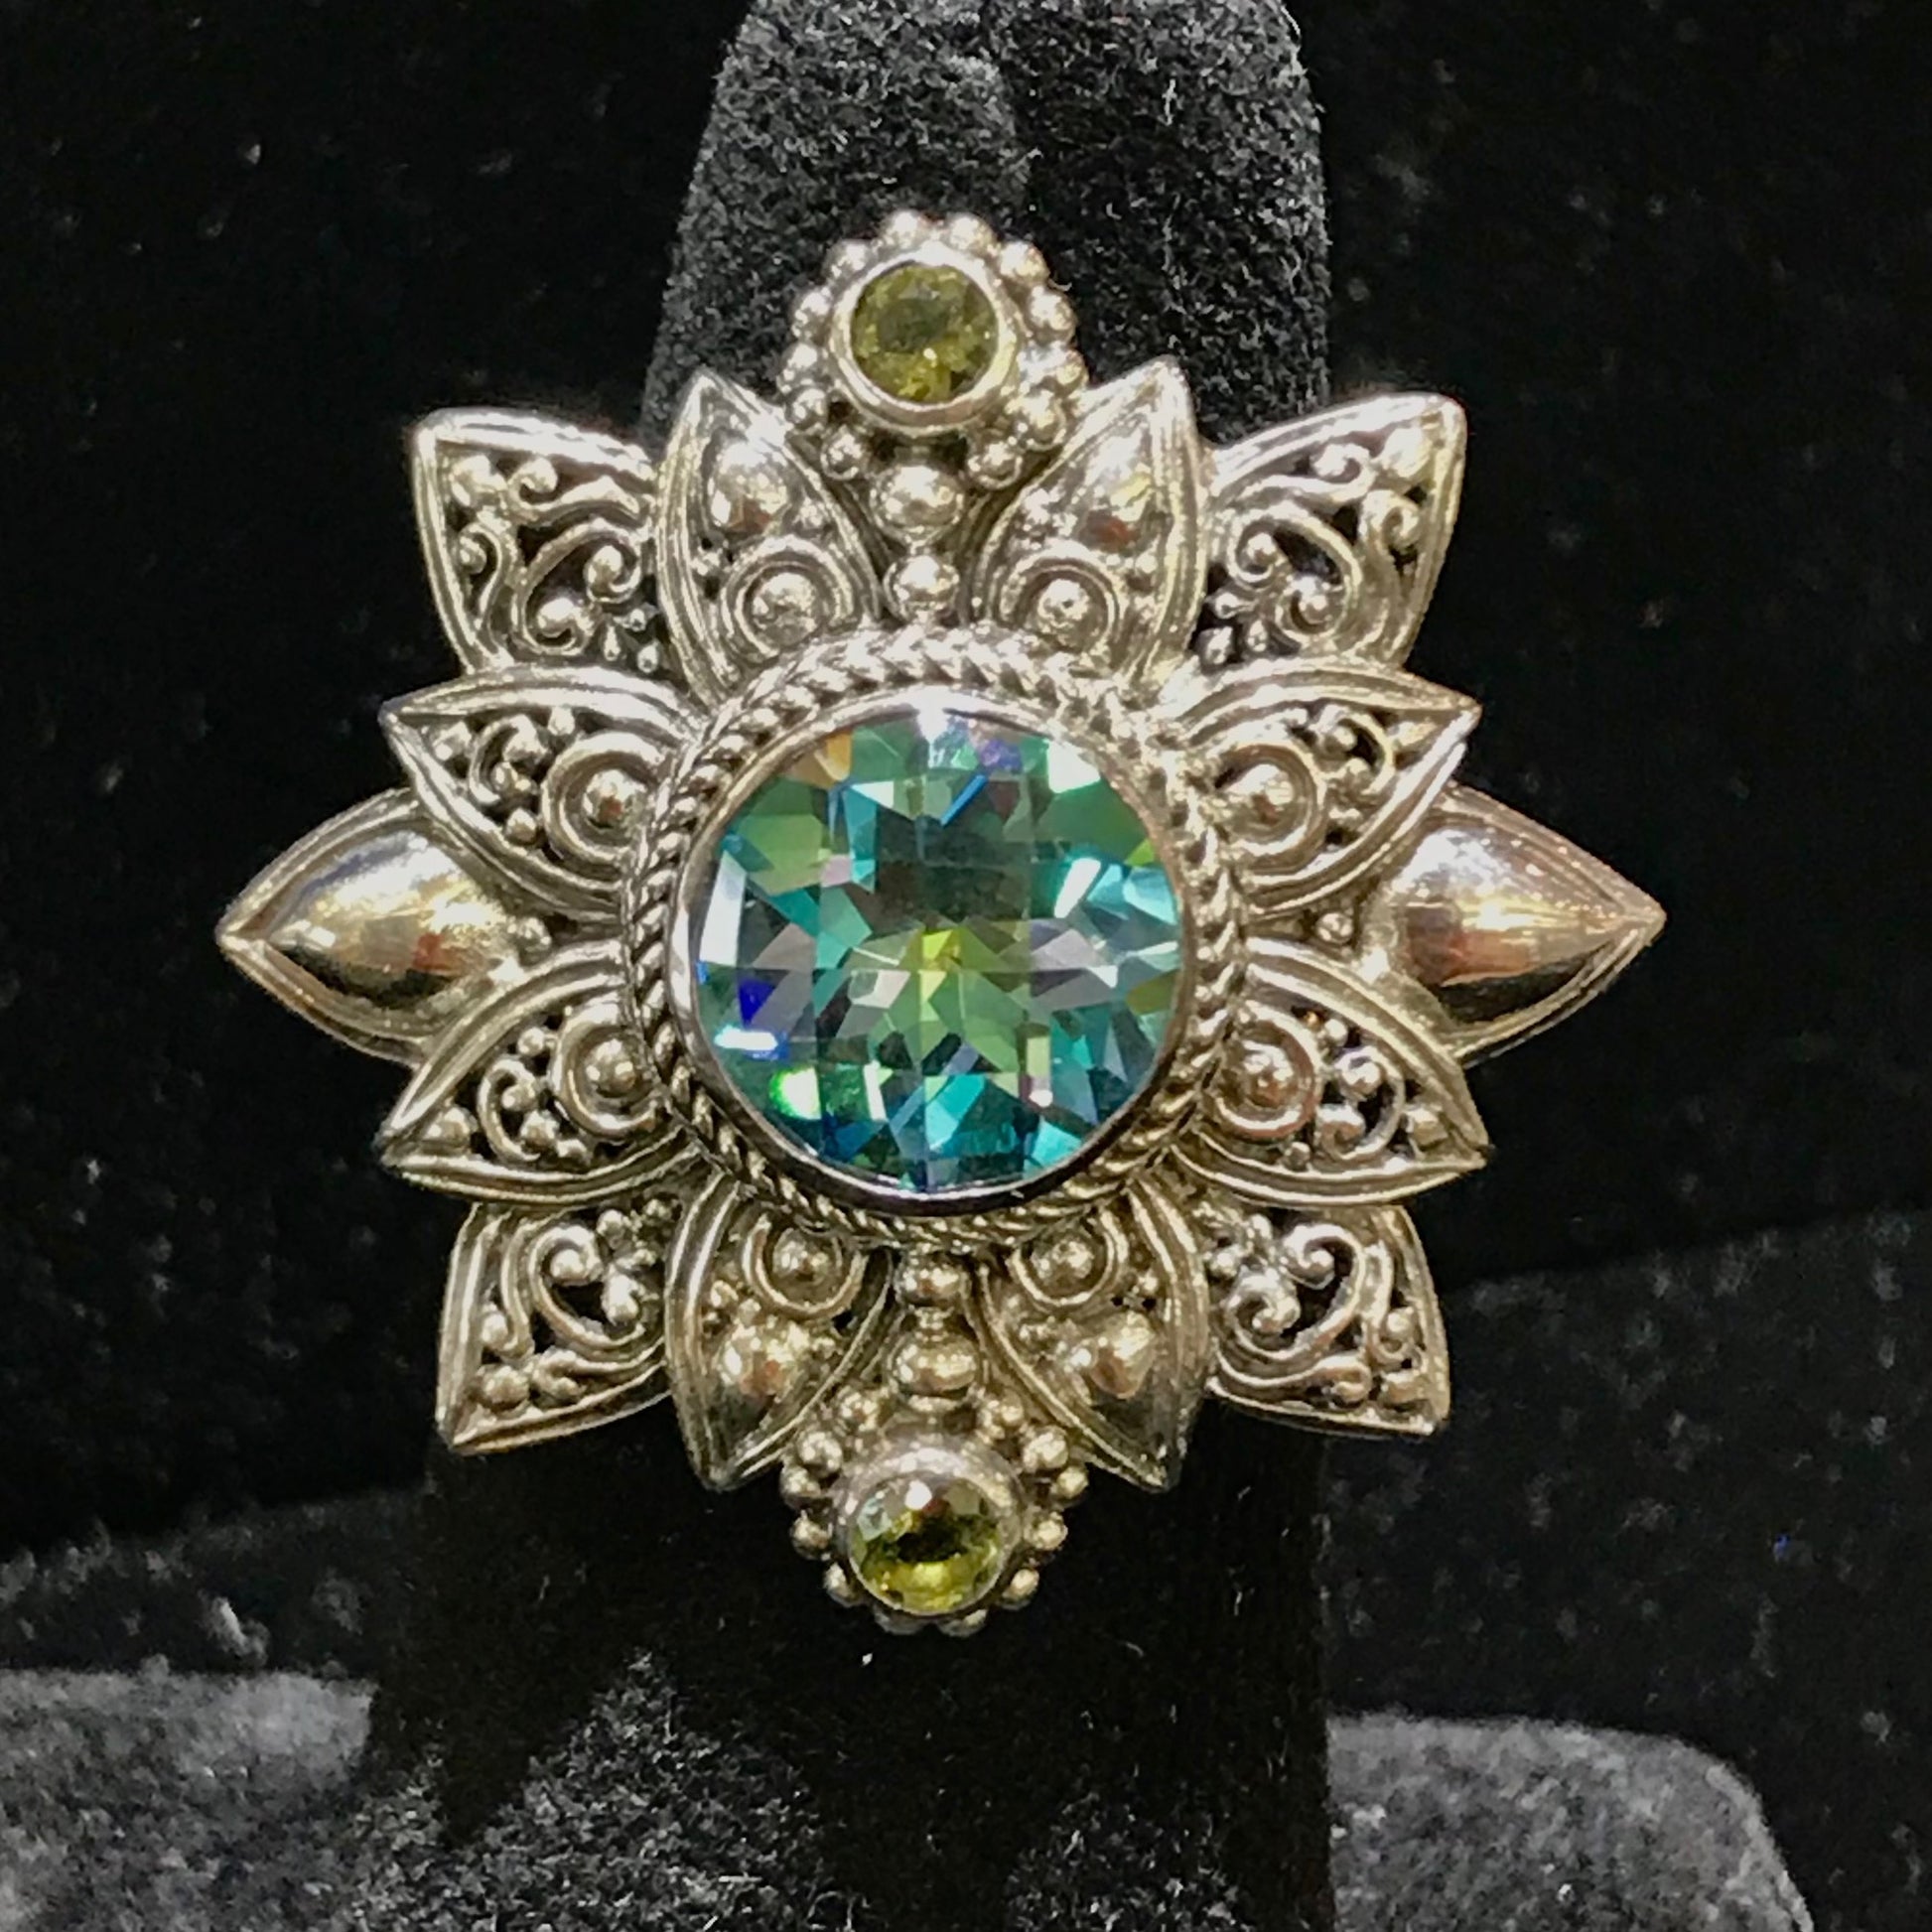 Sterling silver filigree flower design bezel set with synthetic multicolored gemstones.